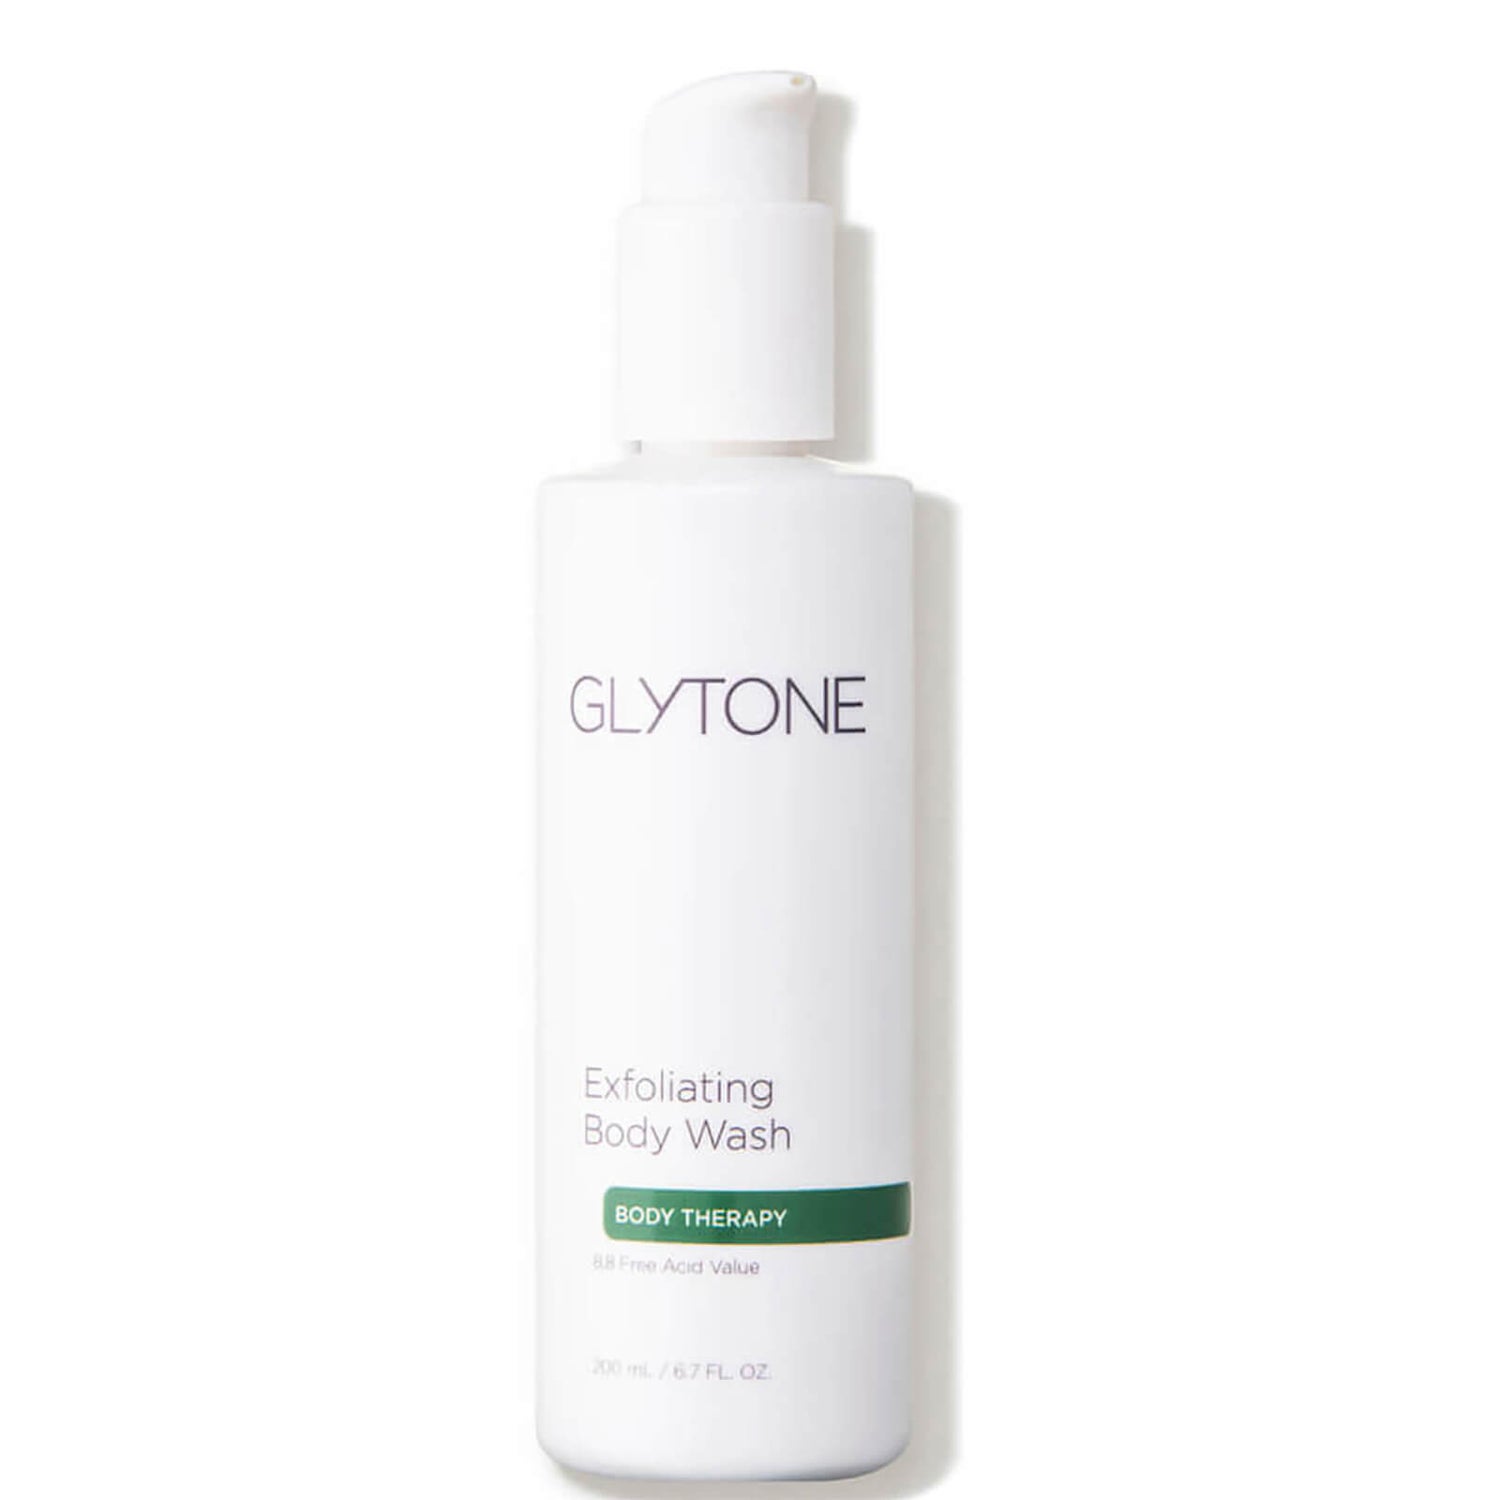 Glytone Exfoliating Body Wash